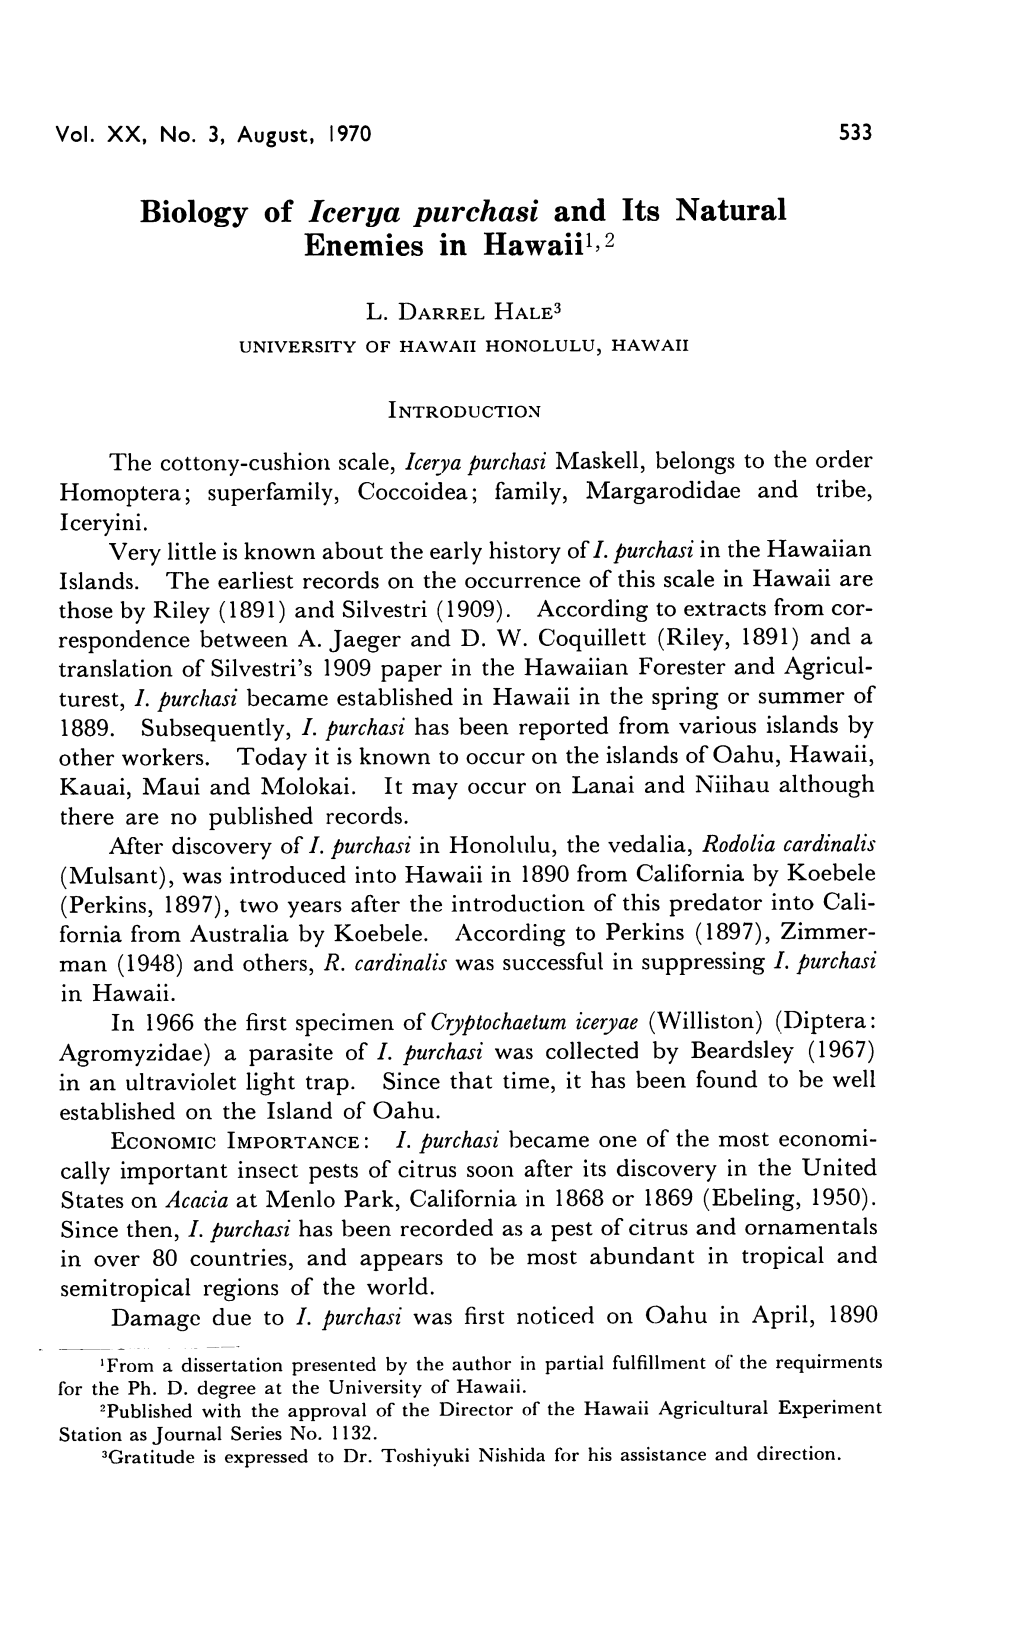 Biology of Icerya Purchasi and Its Natural Enemies in Hawaii12